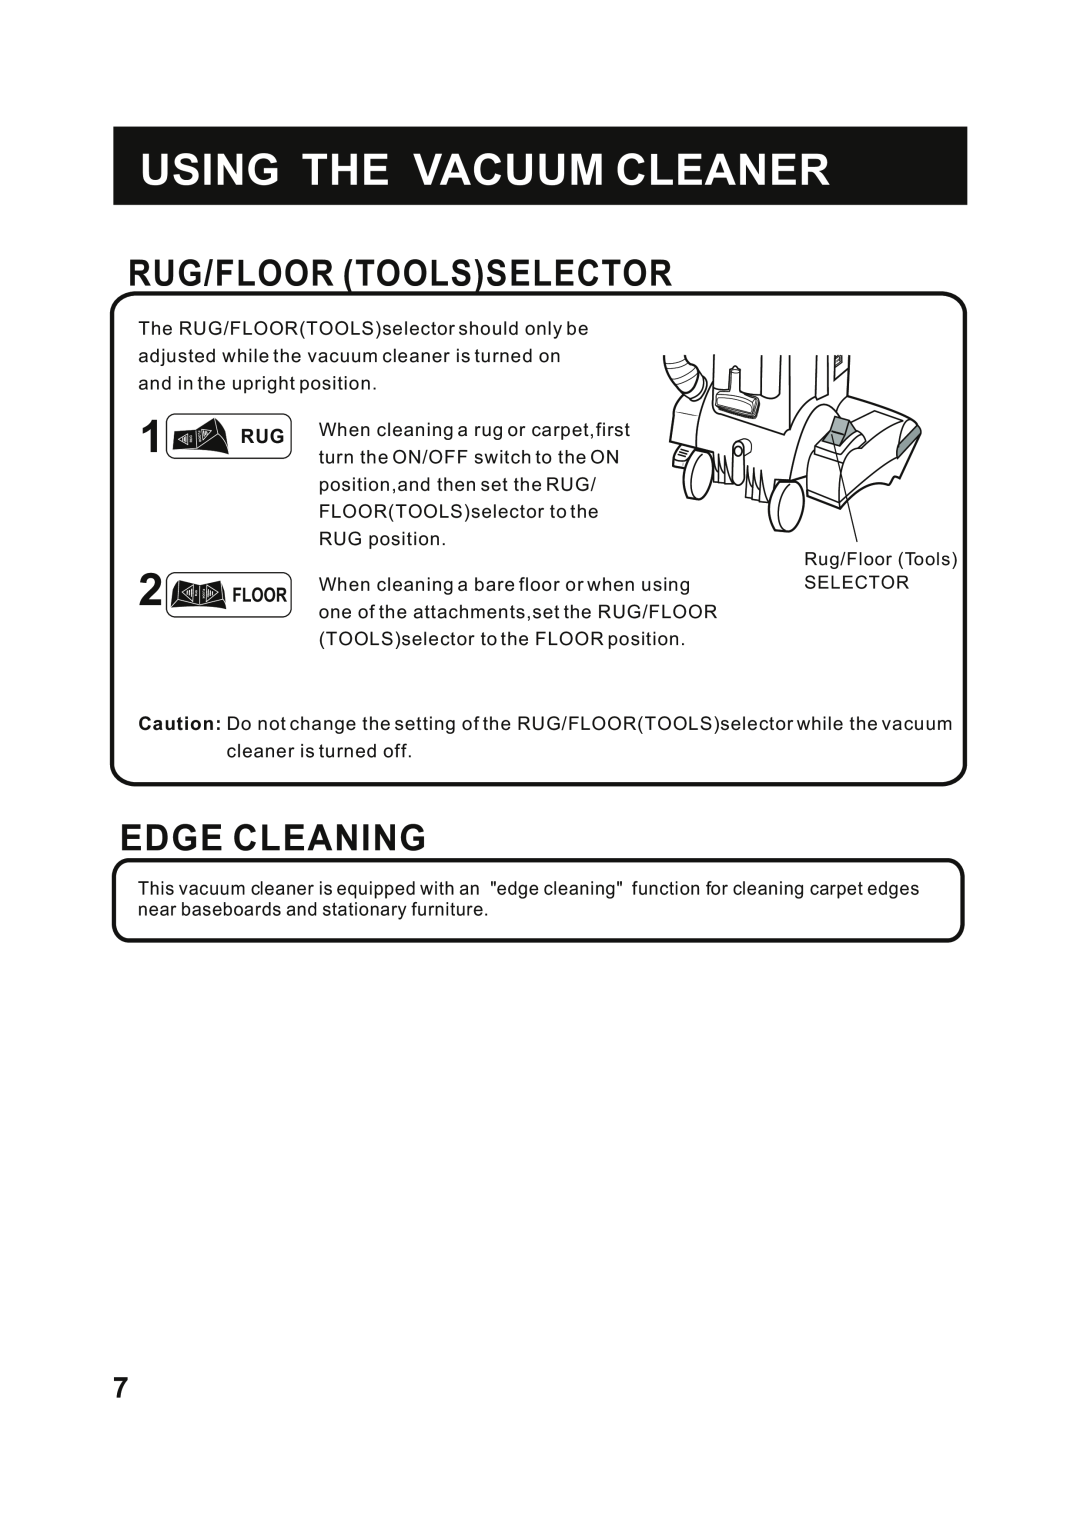 Fantom Vacuum FM741HR instruction manual Rug/Floor Toolsselector, Edge Cleaning, Using The Vacuum Cleaner 